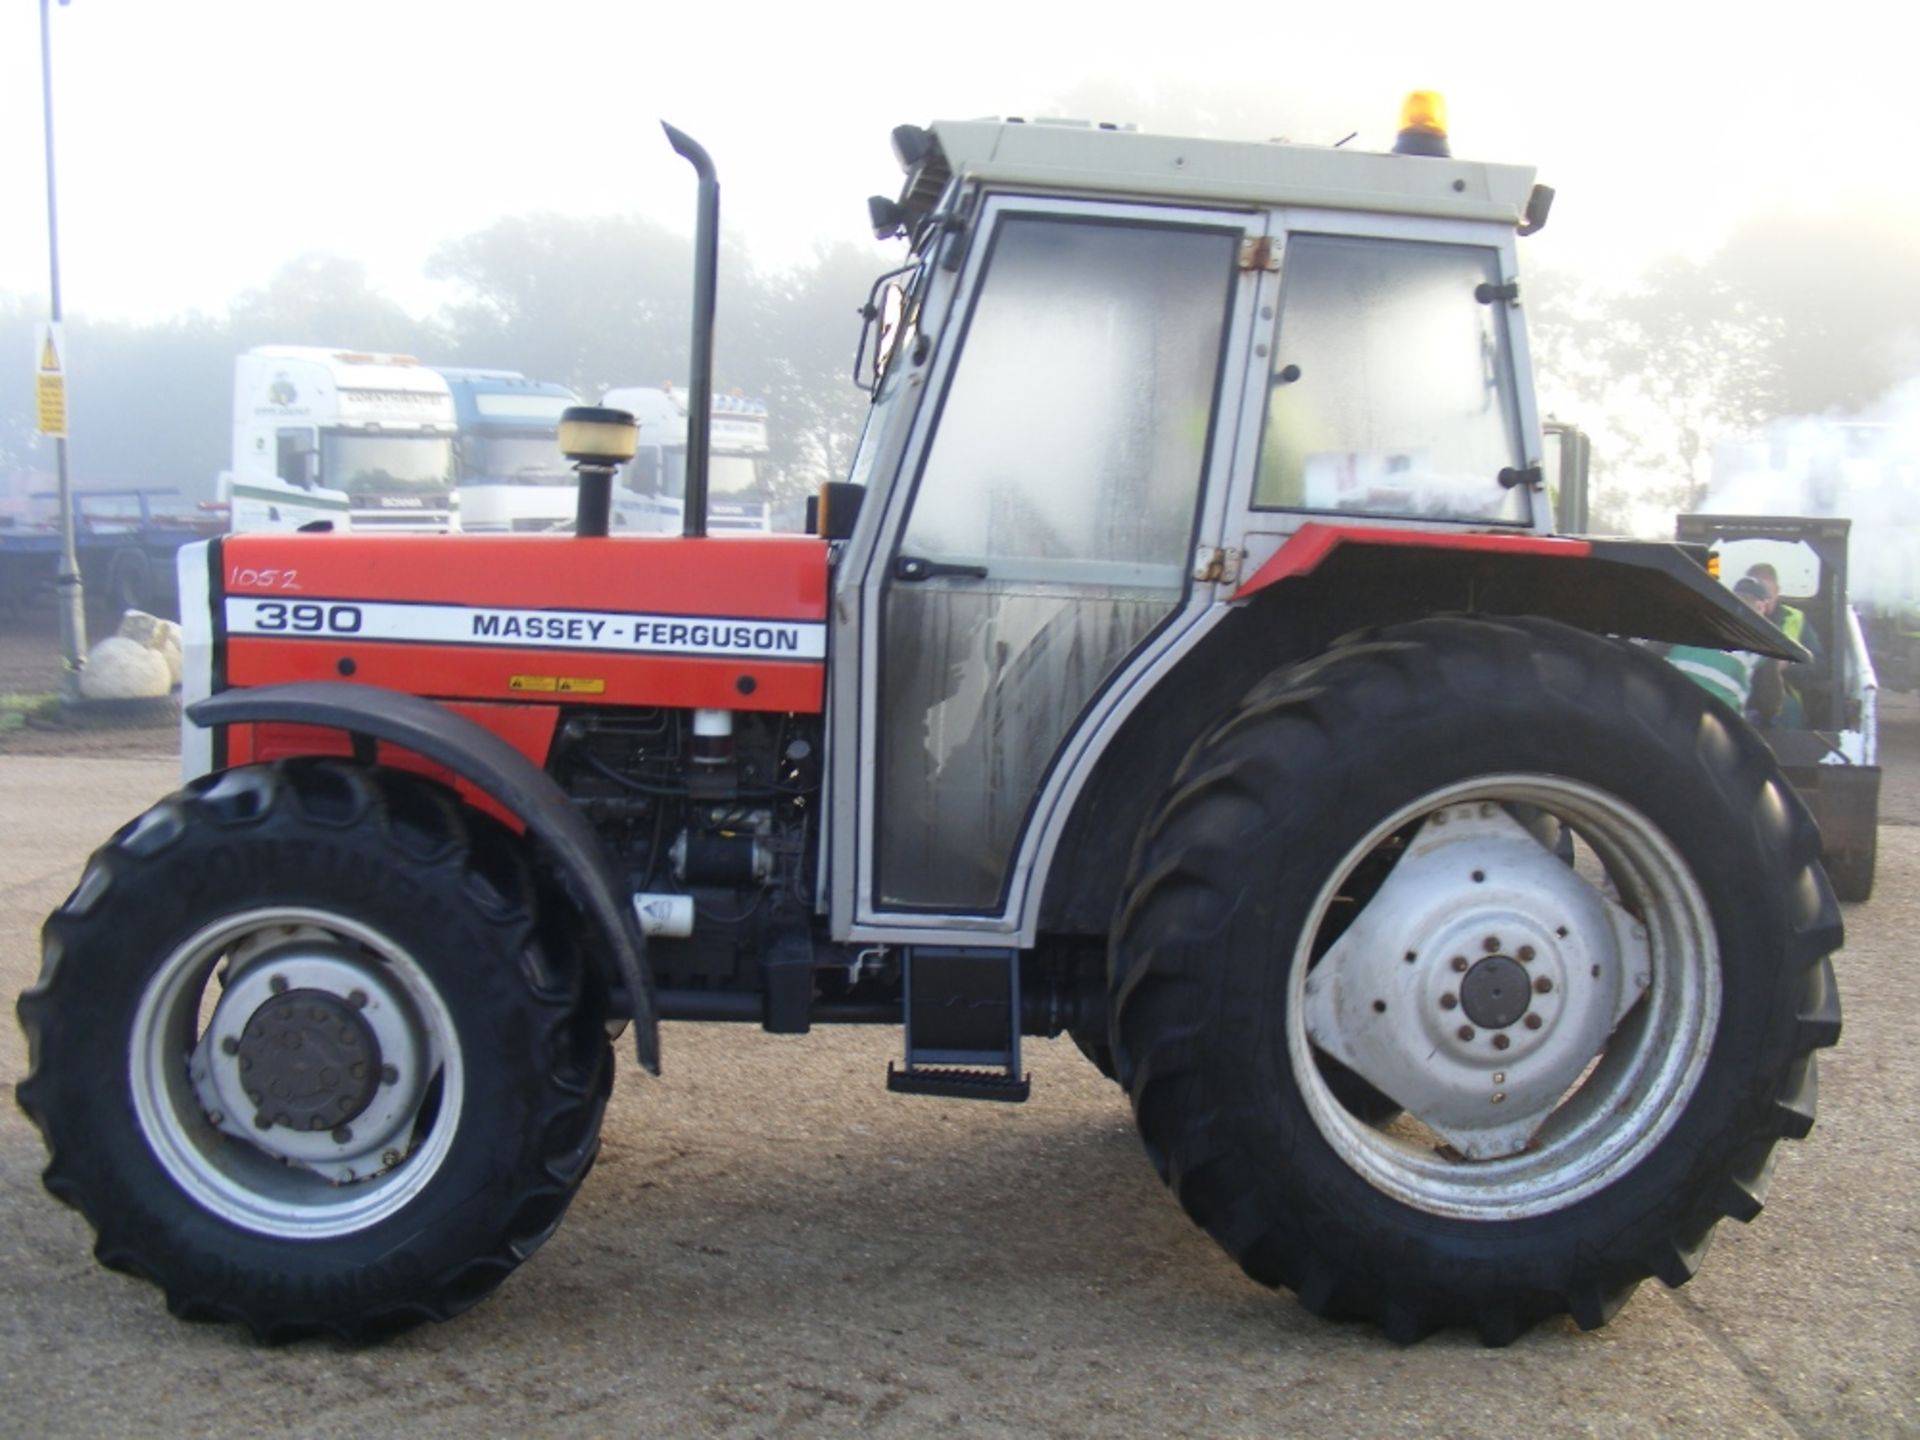 Massey Ferguson 390 4wd Tractor 3274 Hrs. Reg. No. H717 KCS - Image 3 of 4